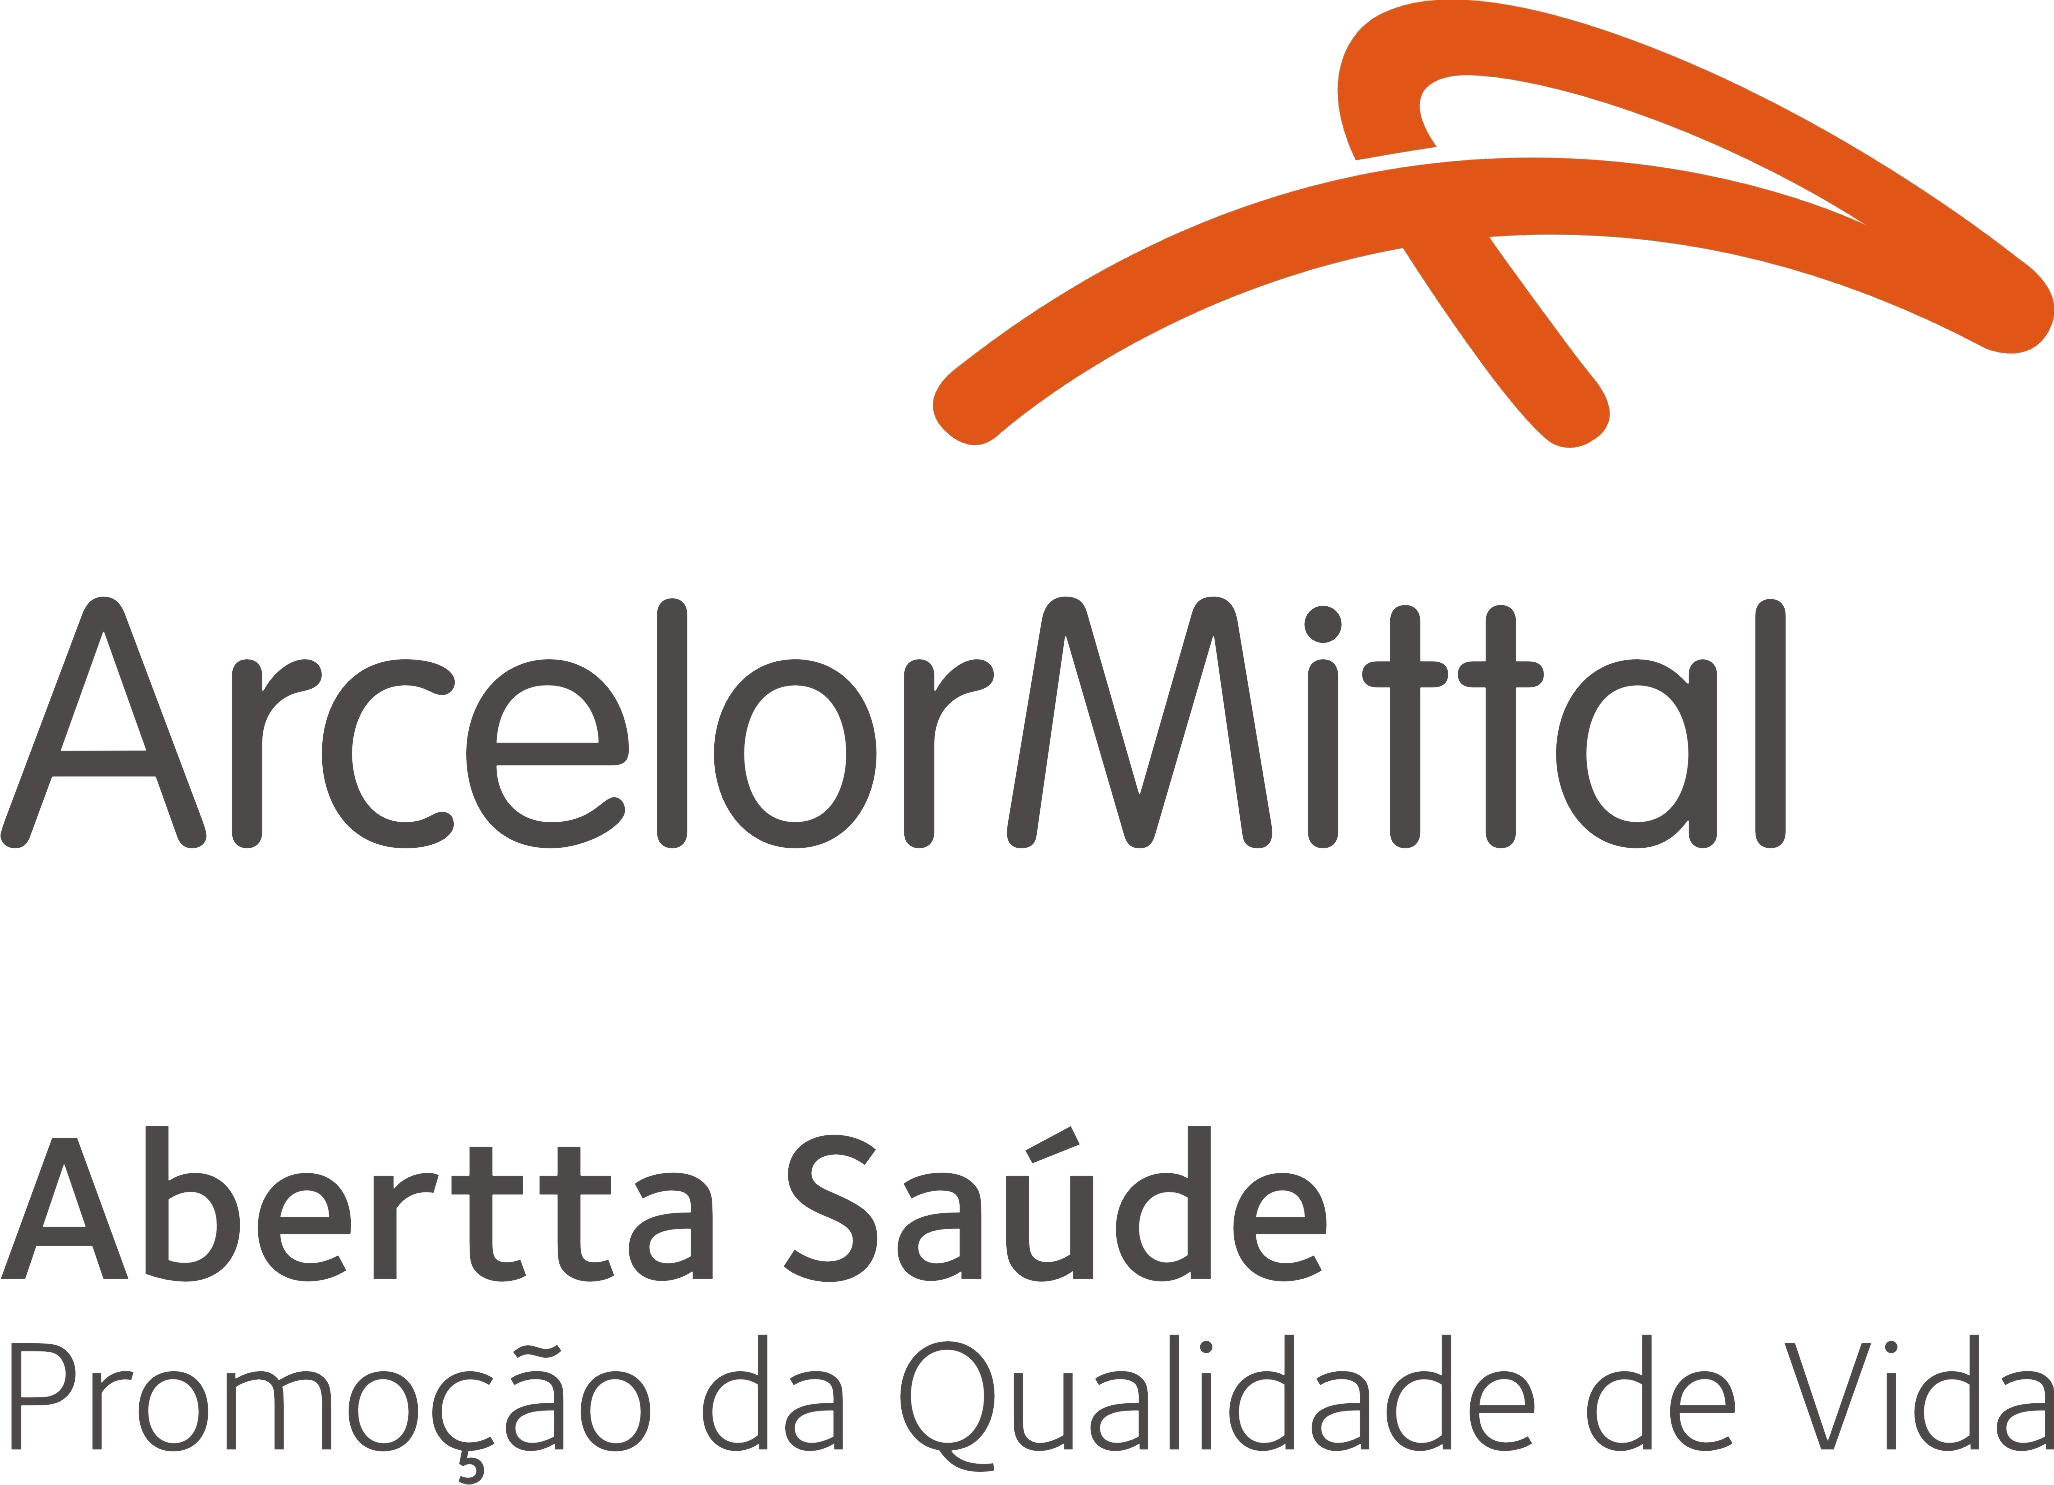 ABERTTA SAÚDE – Arcelor Mittal